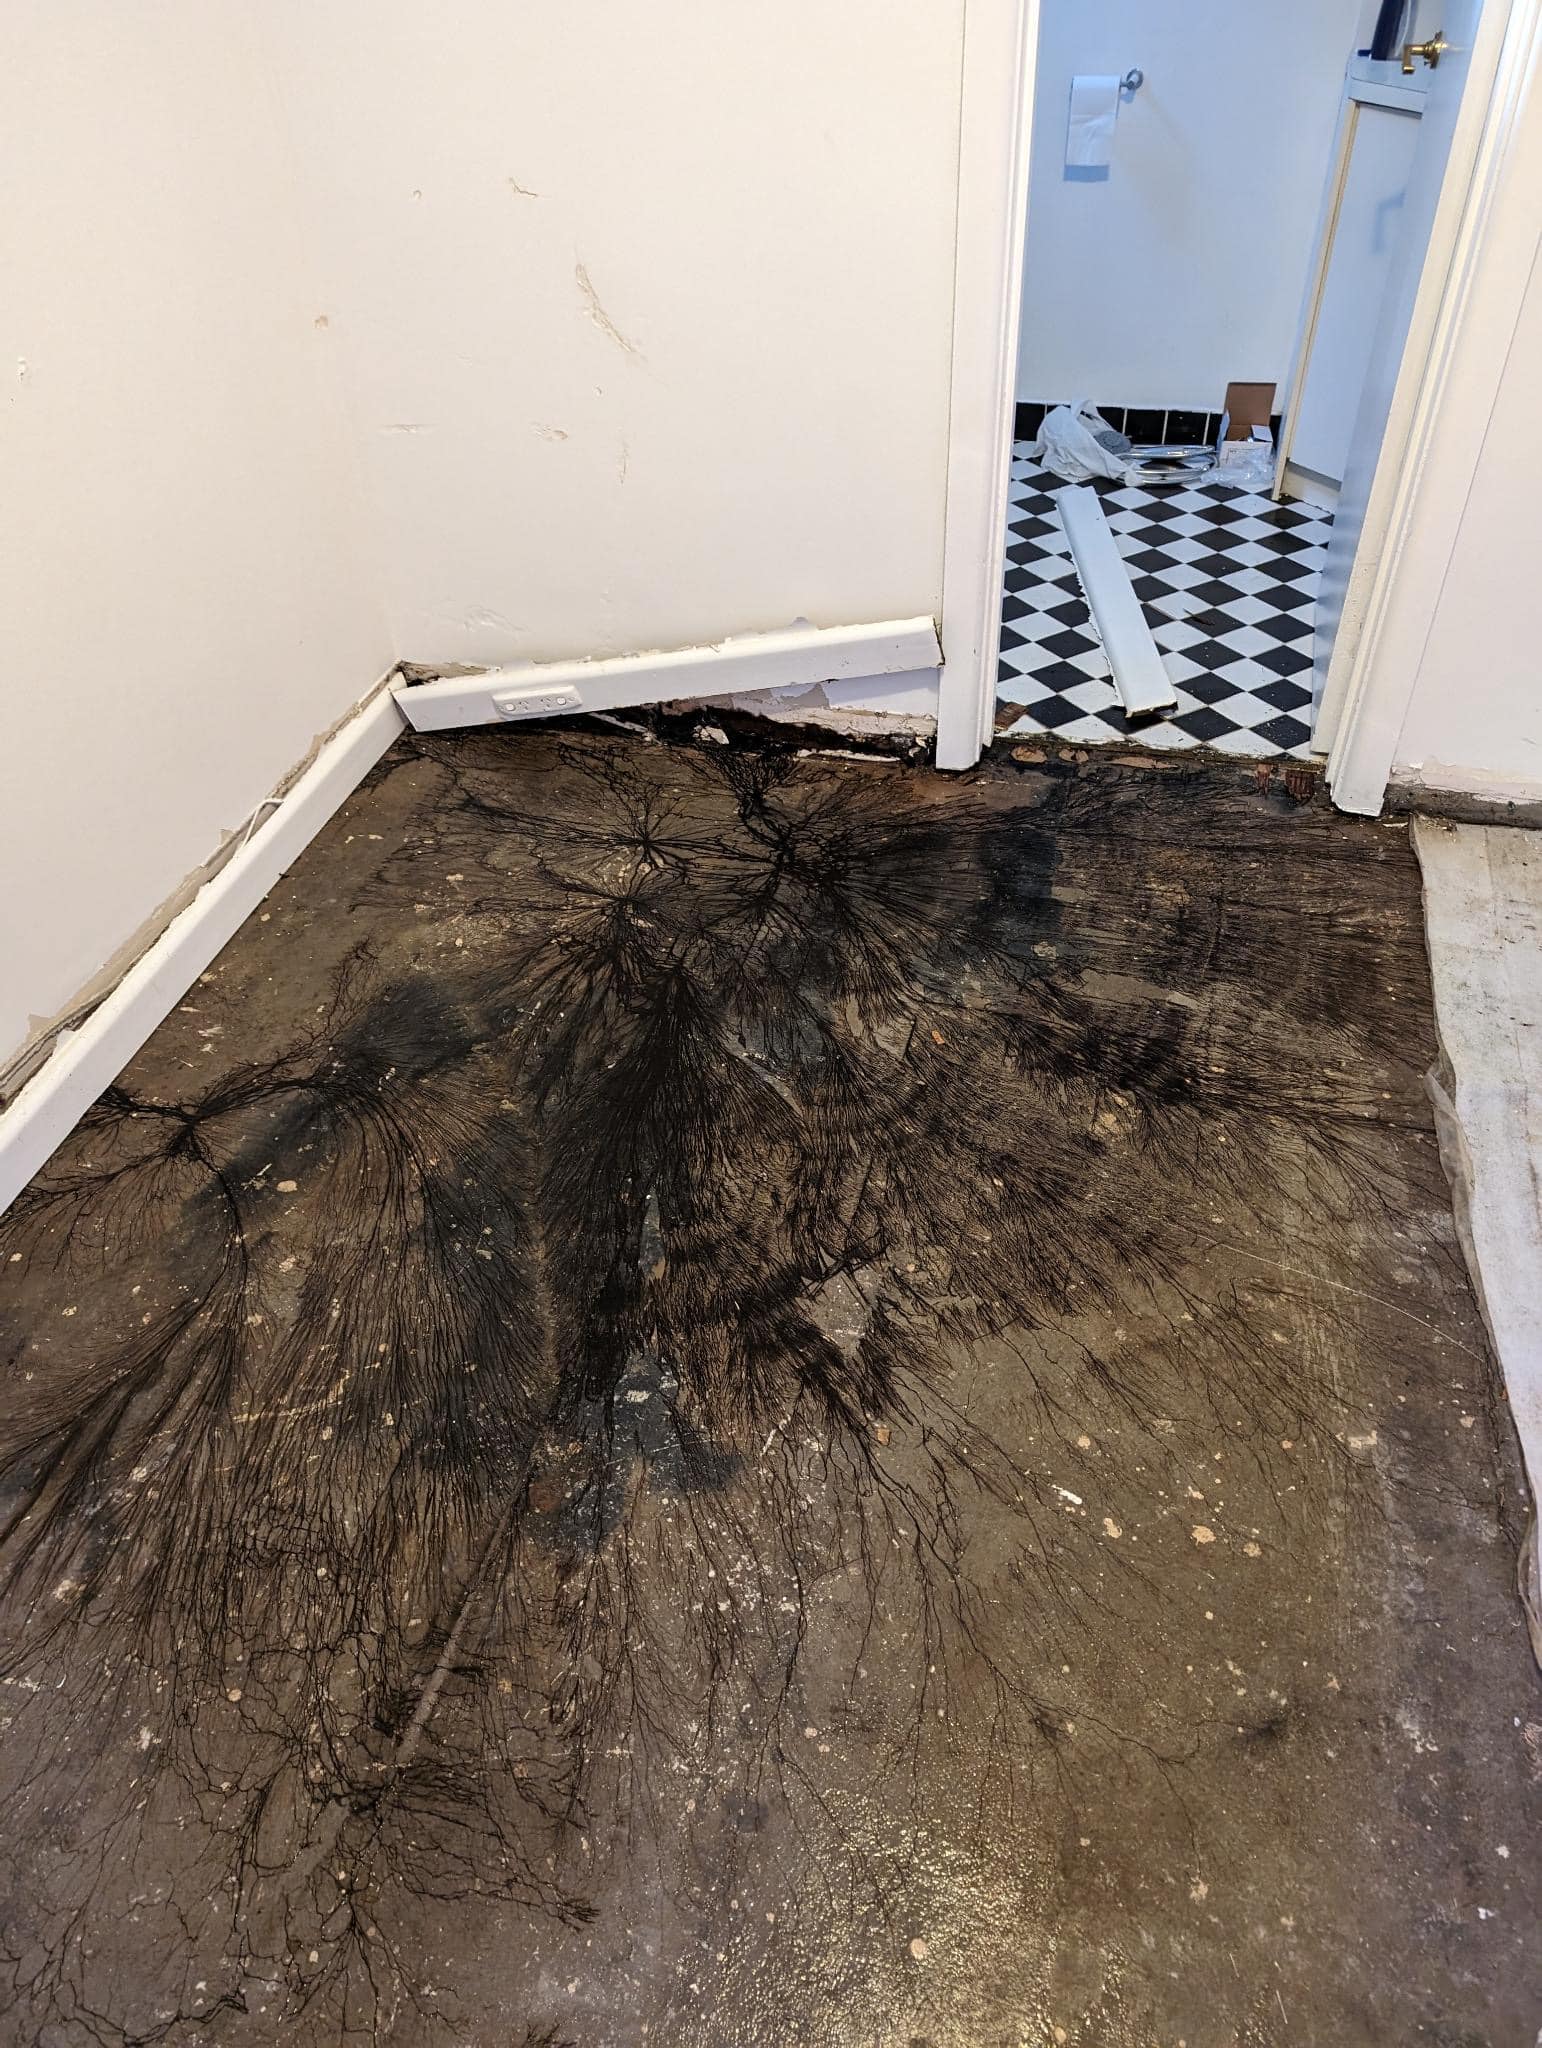 Homeowner stunned after spotting strange slime under floors 2